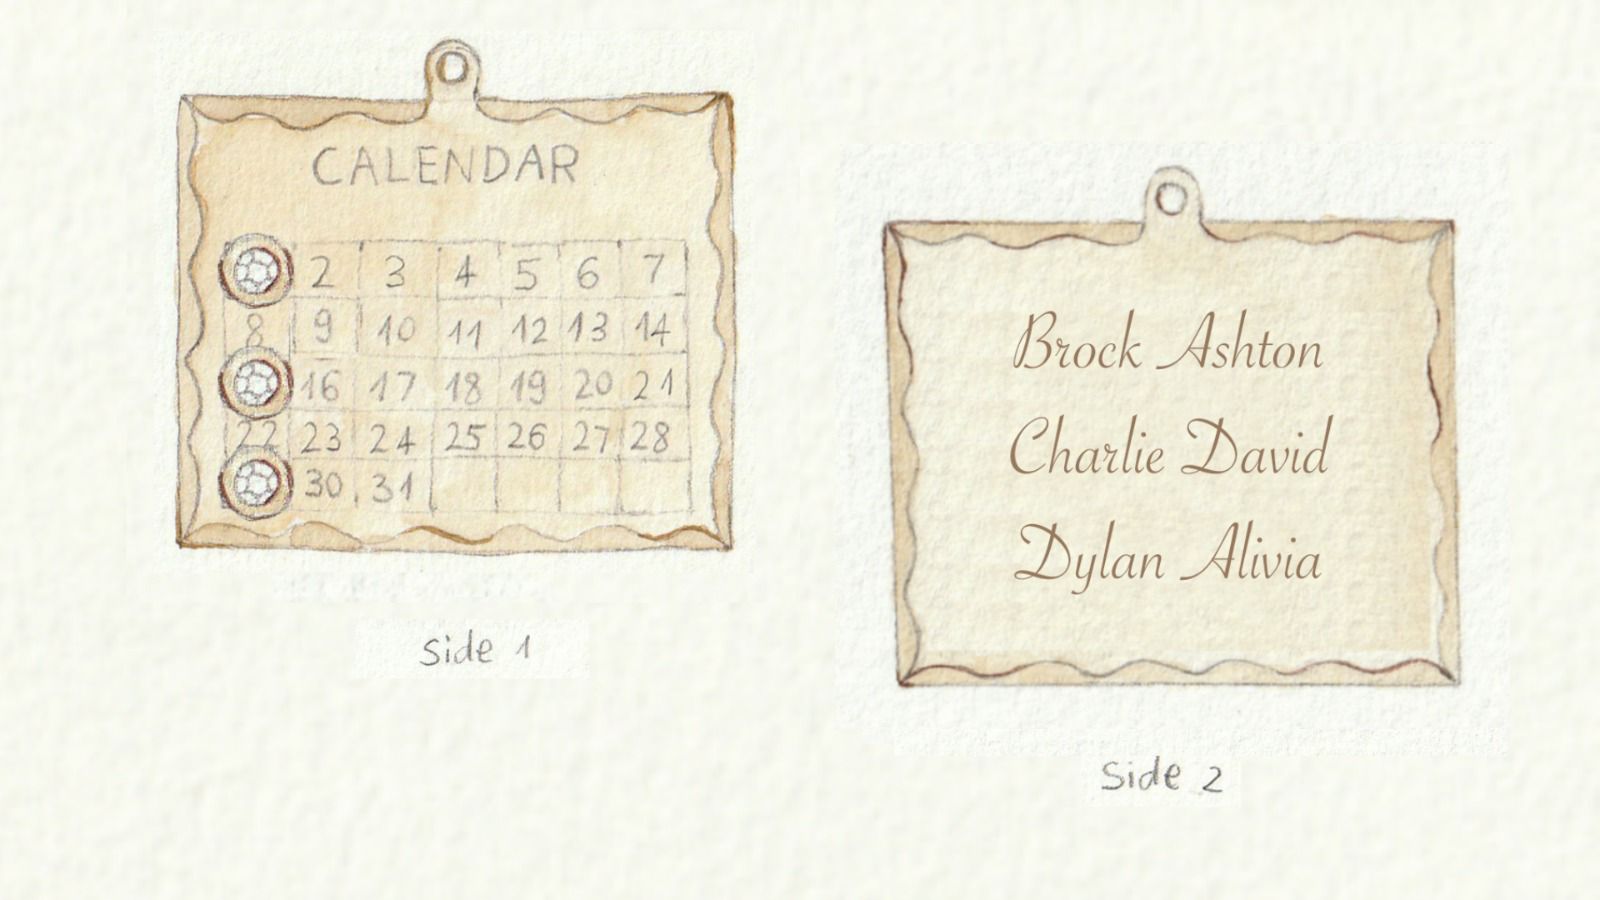 Multiple Date 1960s Calendar Charm